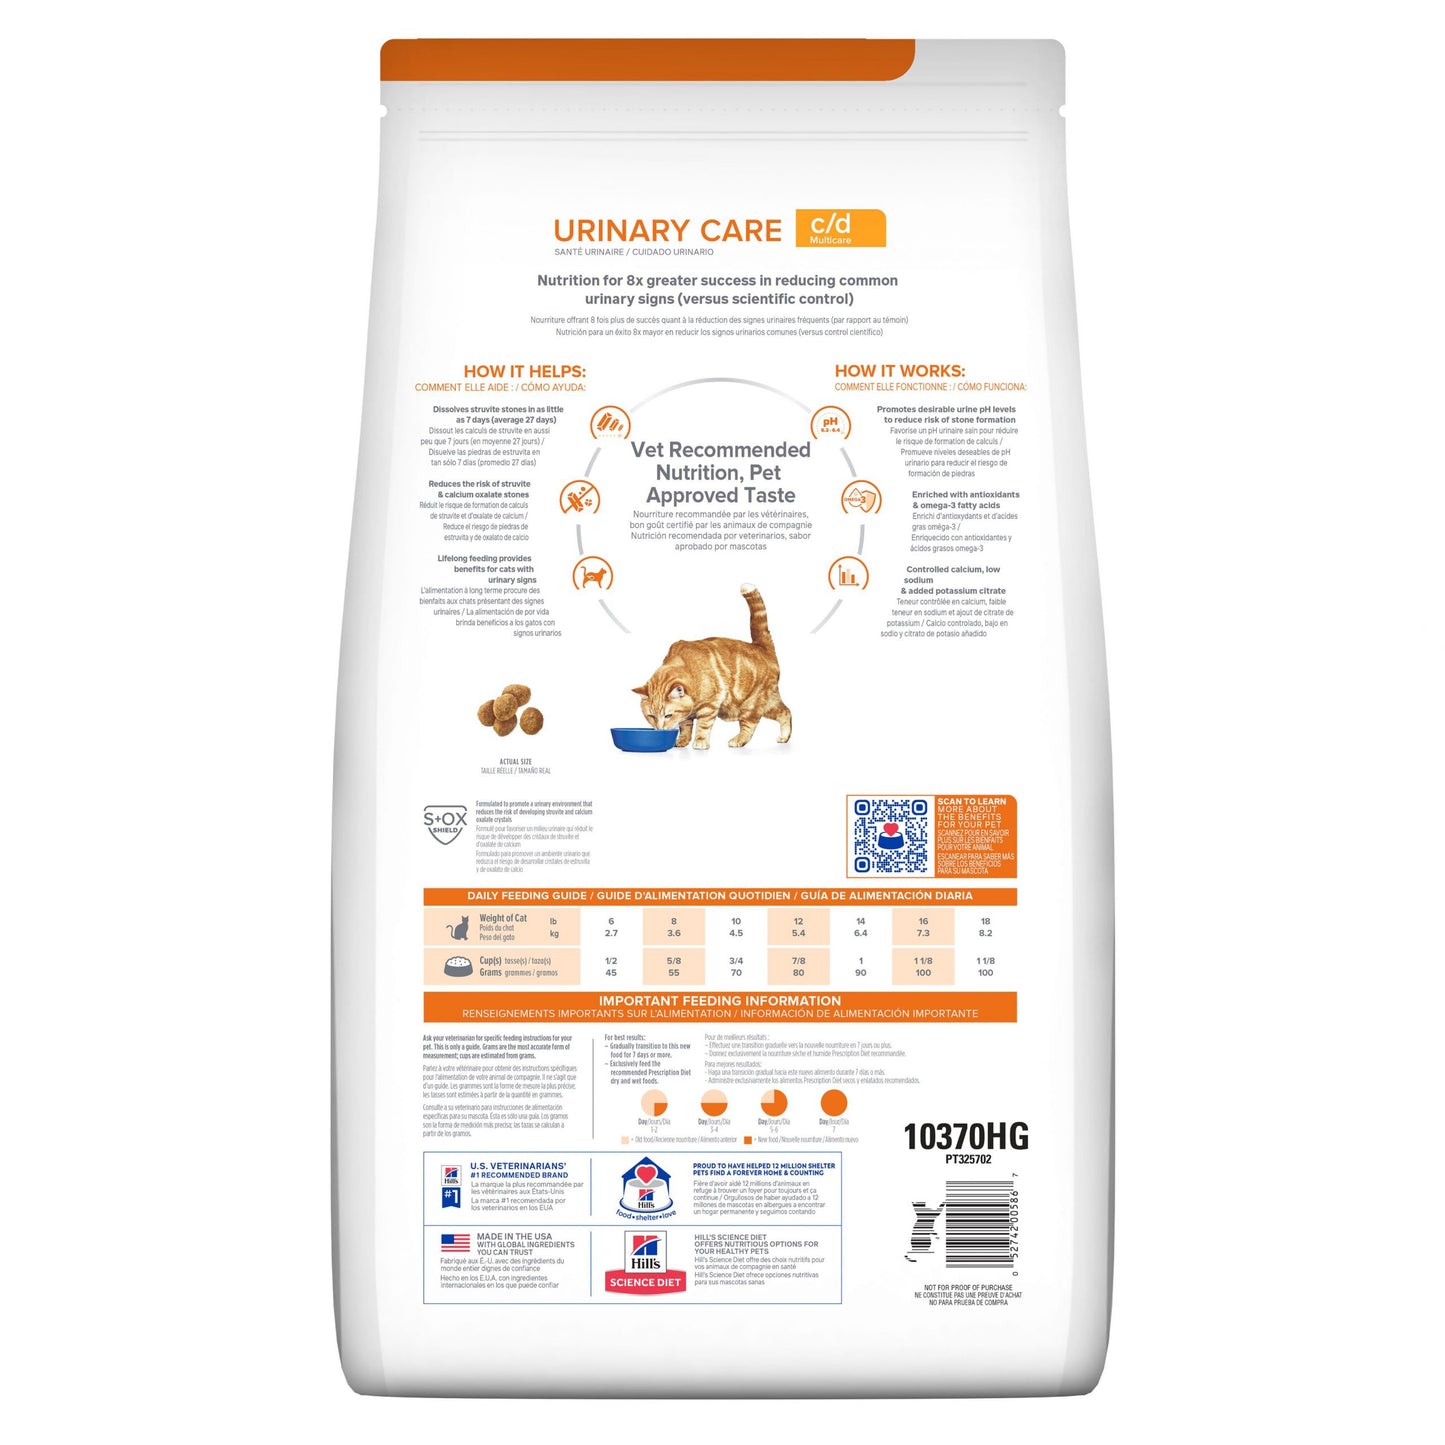 Hill's Prescription Diet c/d Urinary Multicare Feline 4 lbs